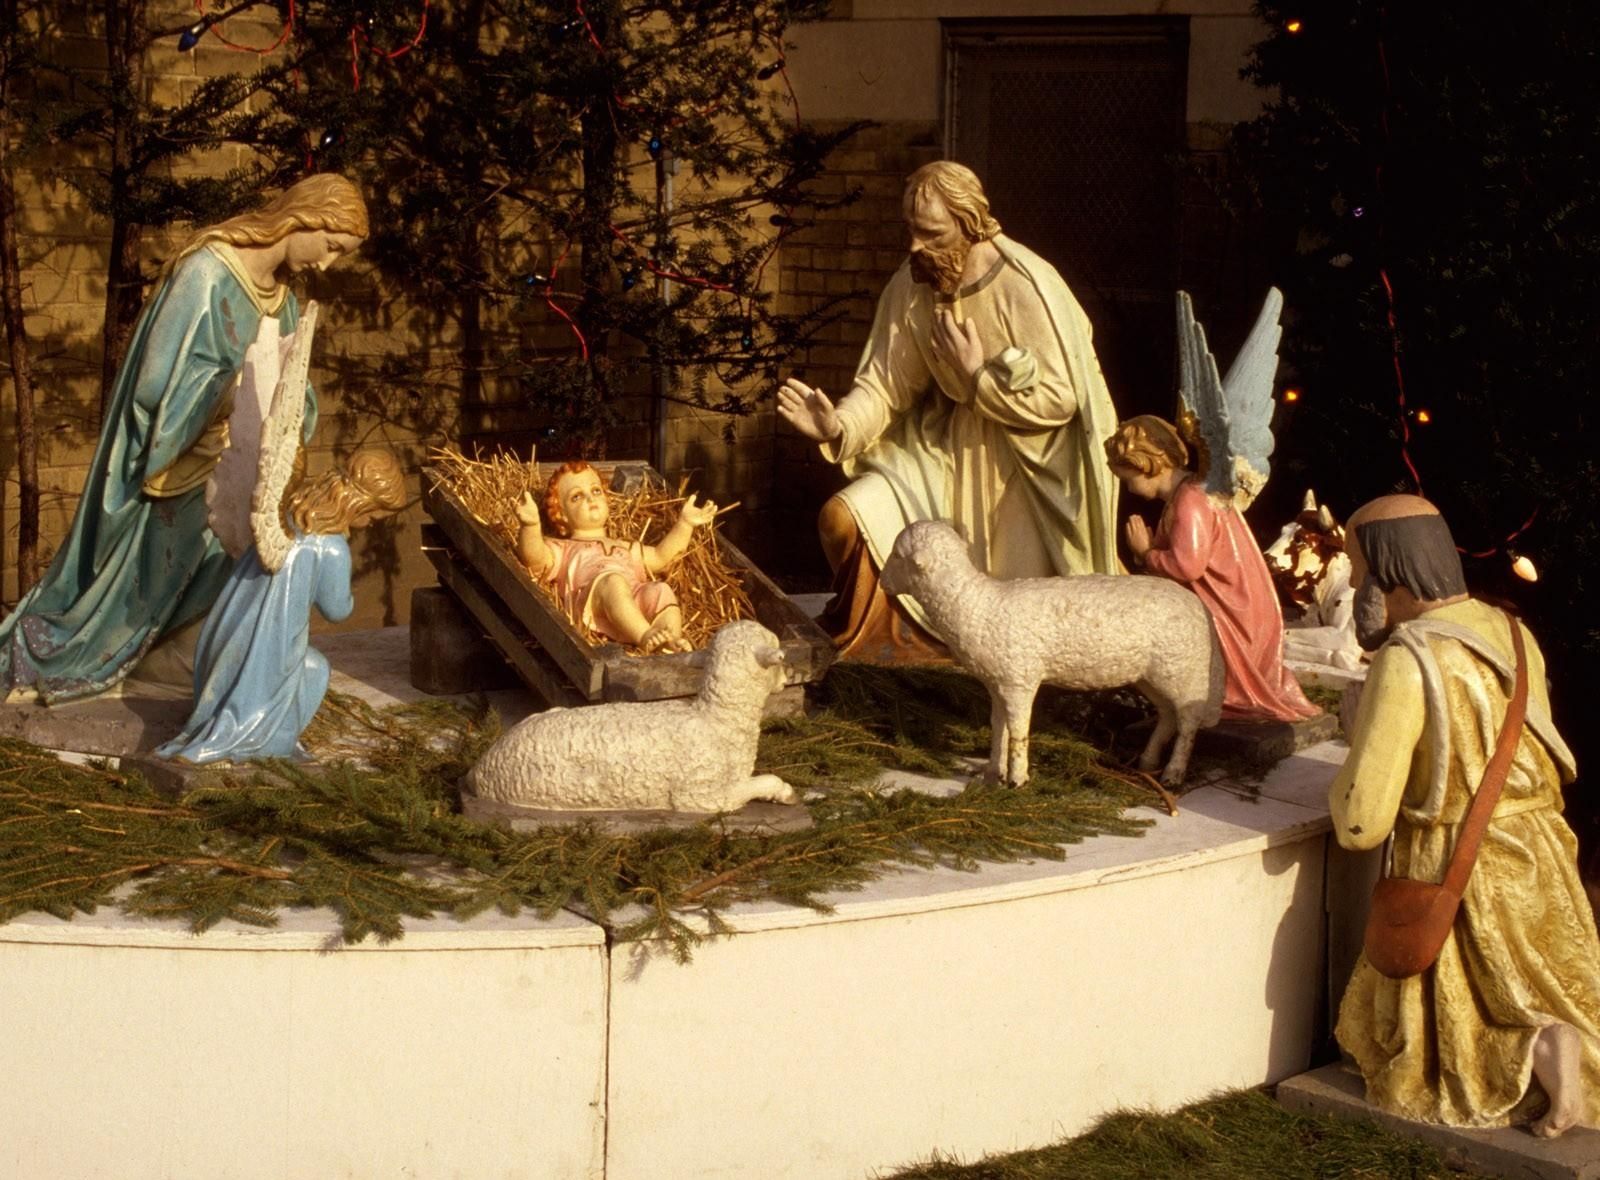 Wallpaper, Christmas, holiday, jesus, manger, sheep, needles, people, angels, figurines 1600x1180